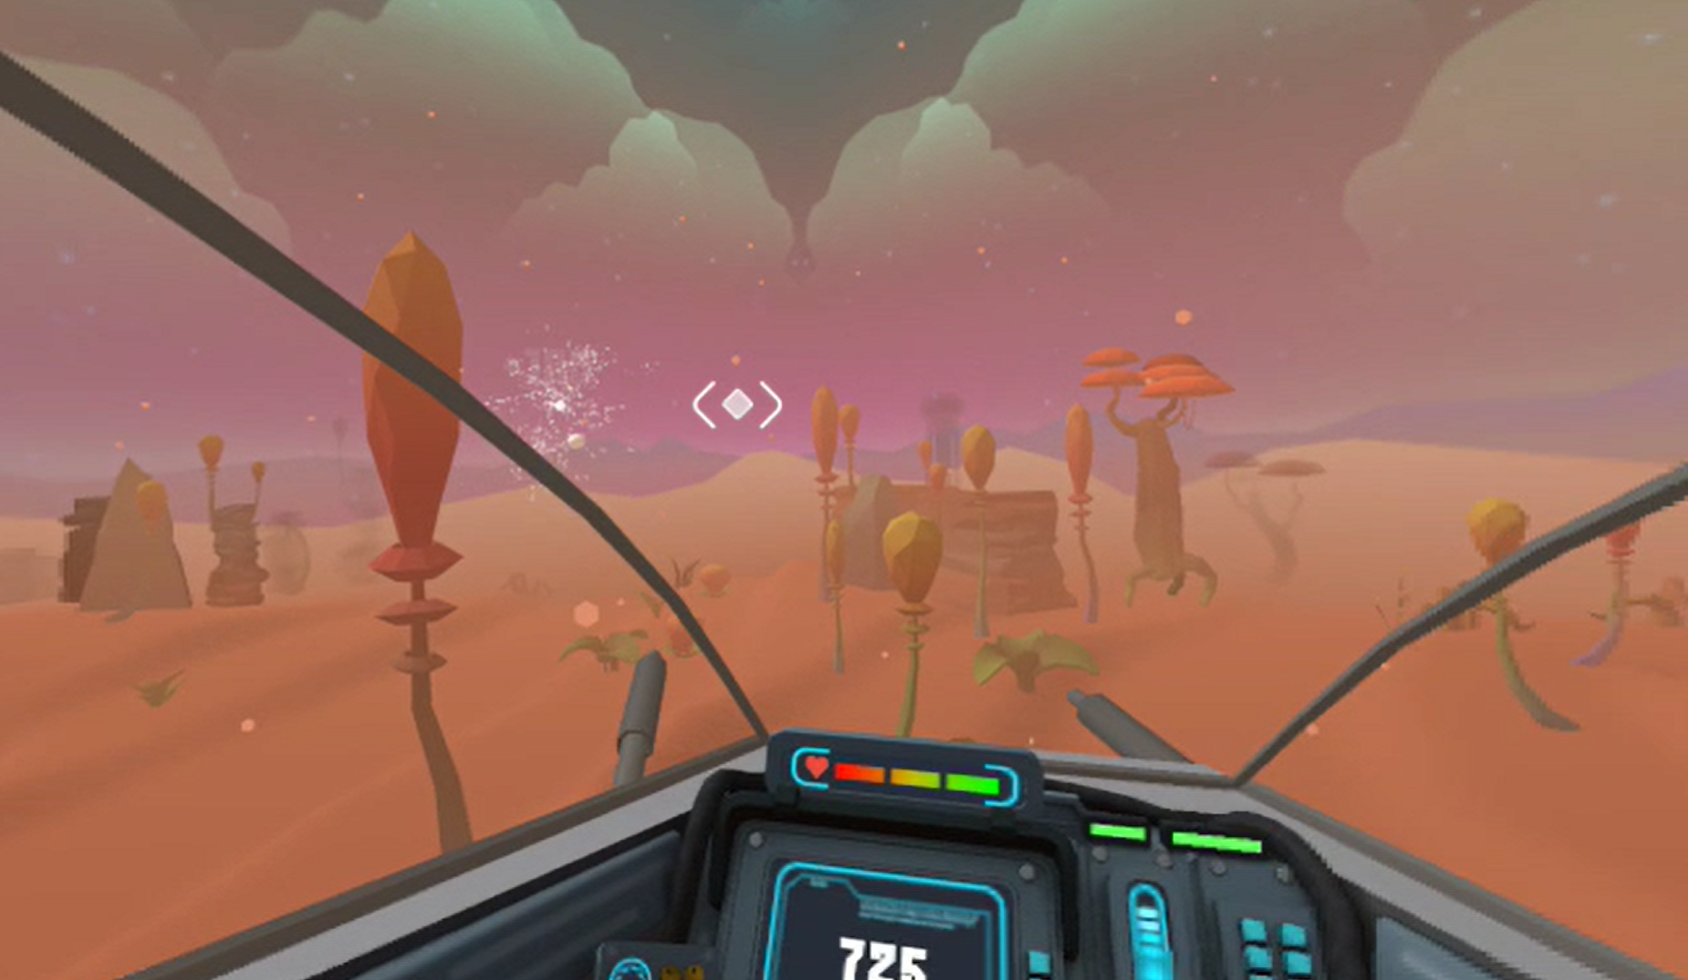 Planet Ride Cockpit, focusing on target